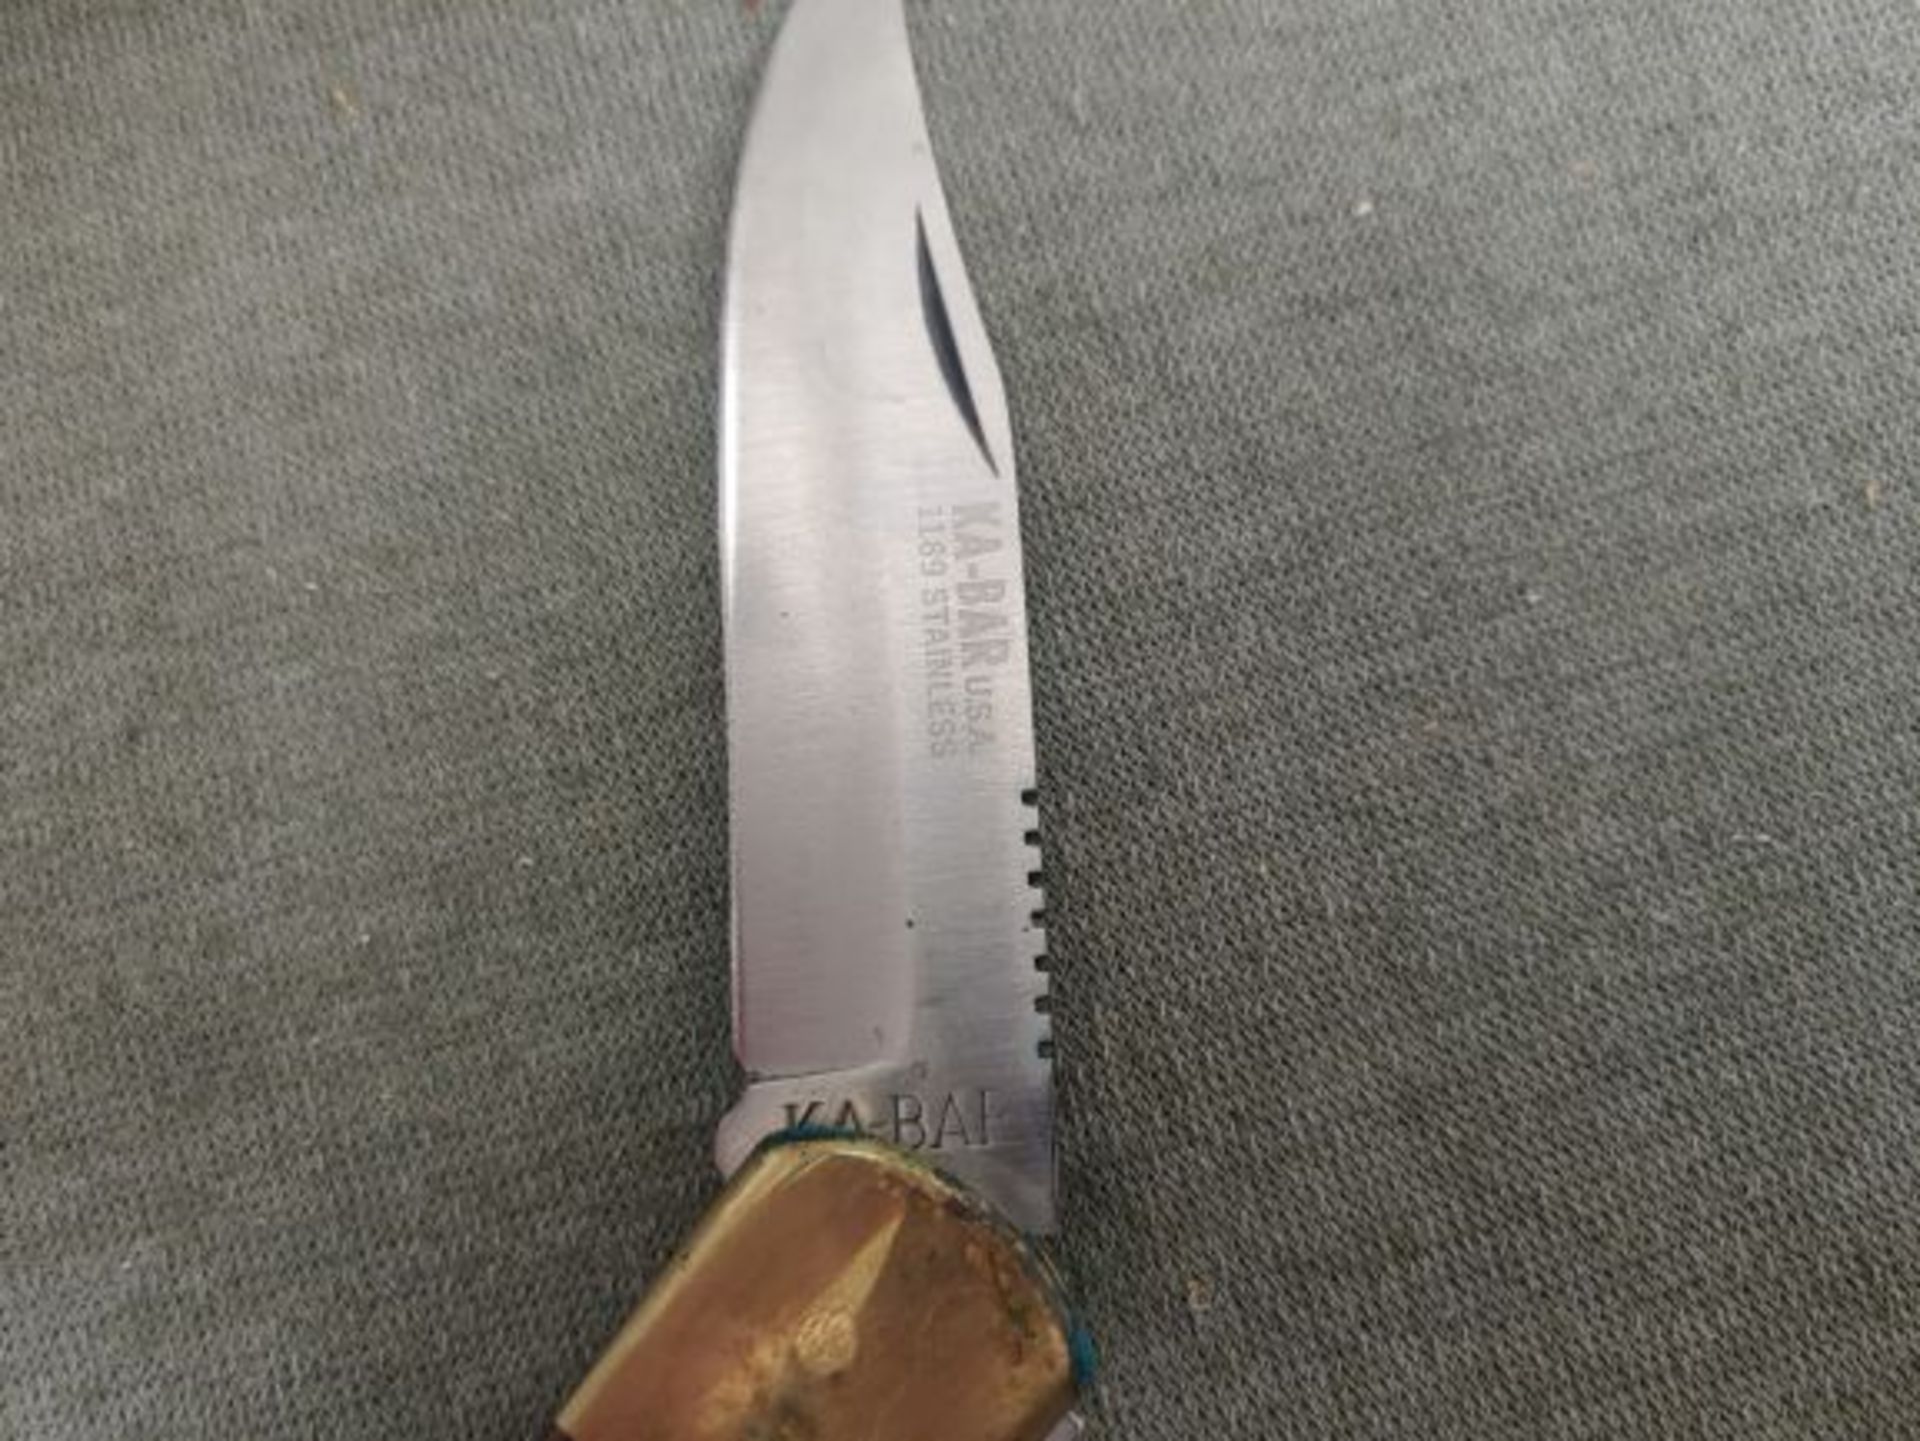 650. Ka Bar Folding Knife in Case - Image 2 of 3